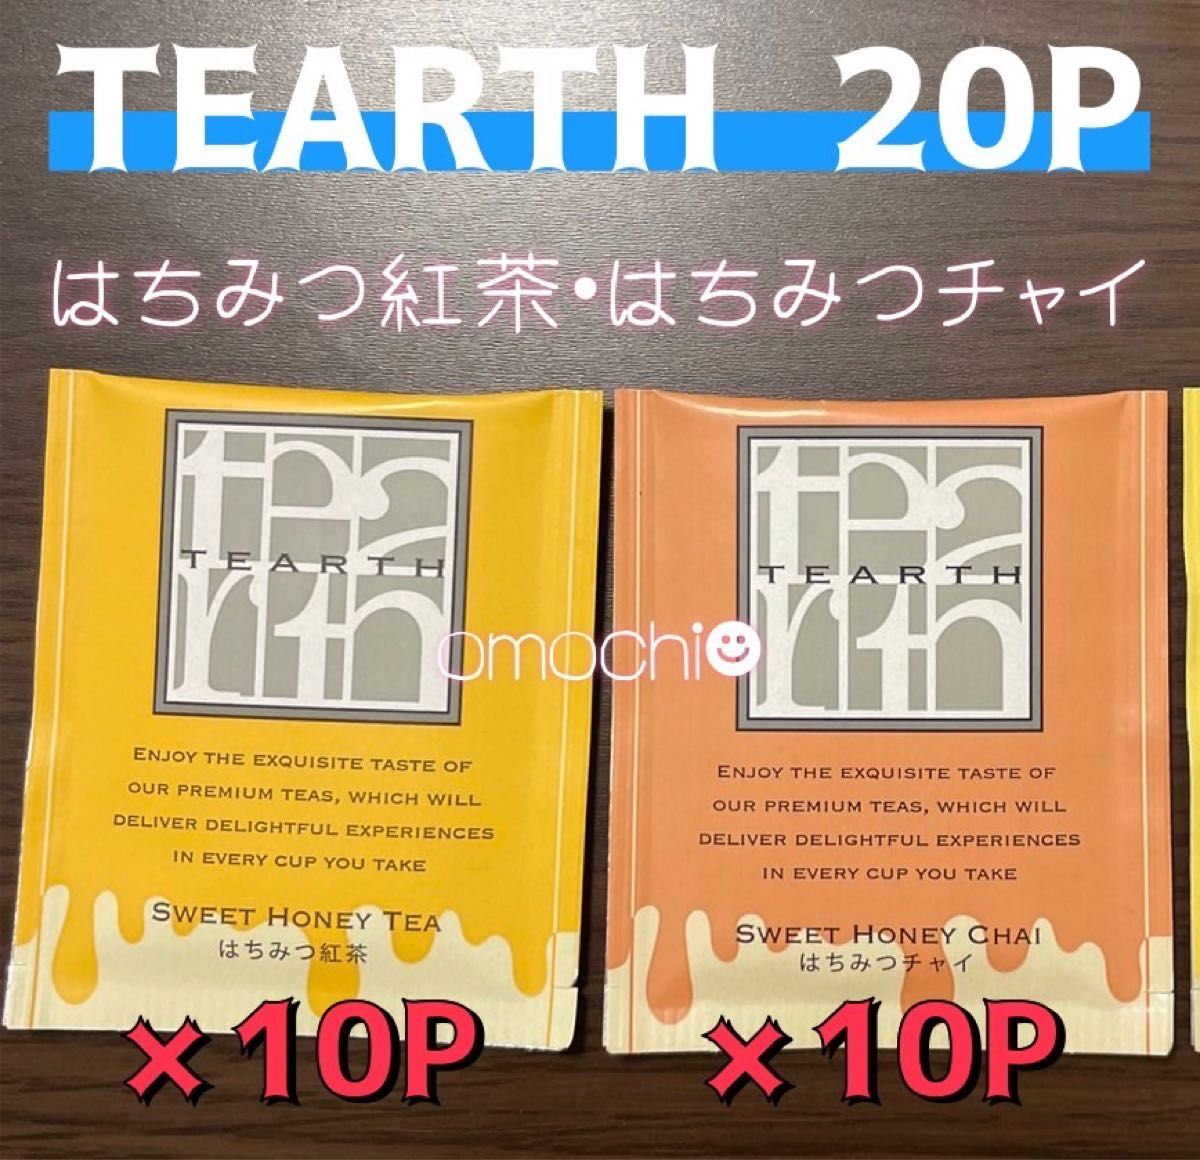 【202】TEARTH 20P はちみつ紅茶 はちみつチャイ